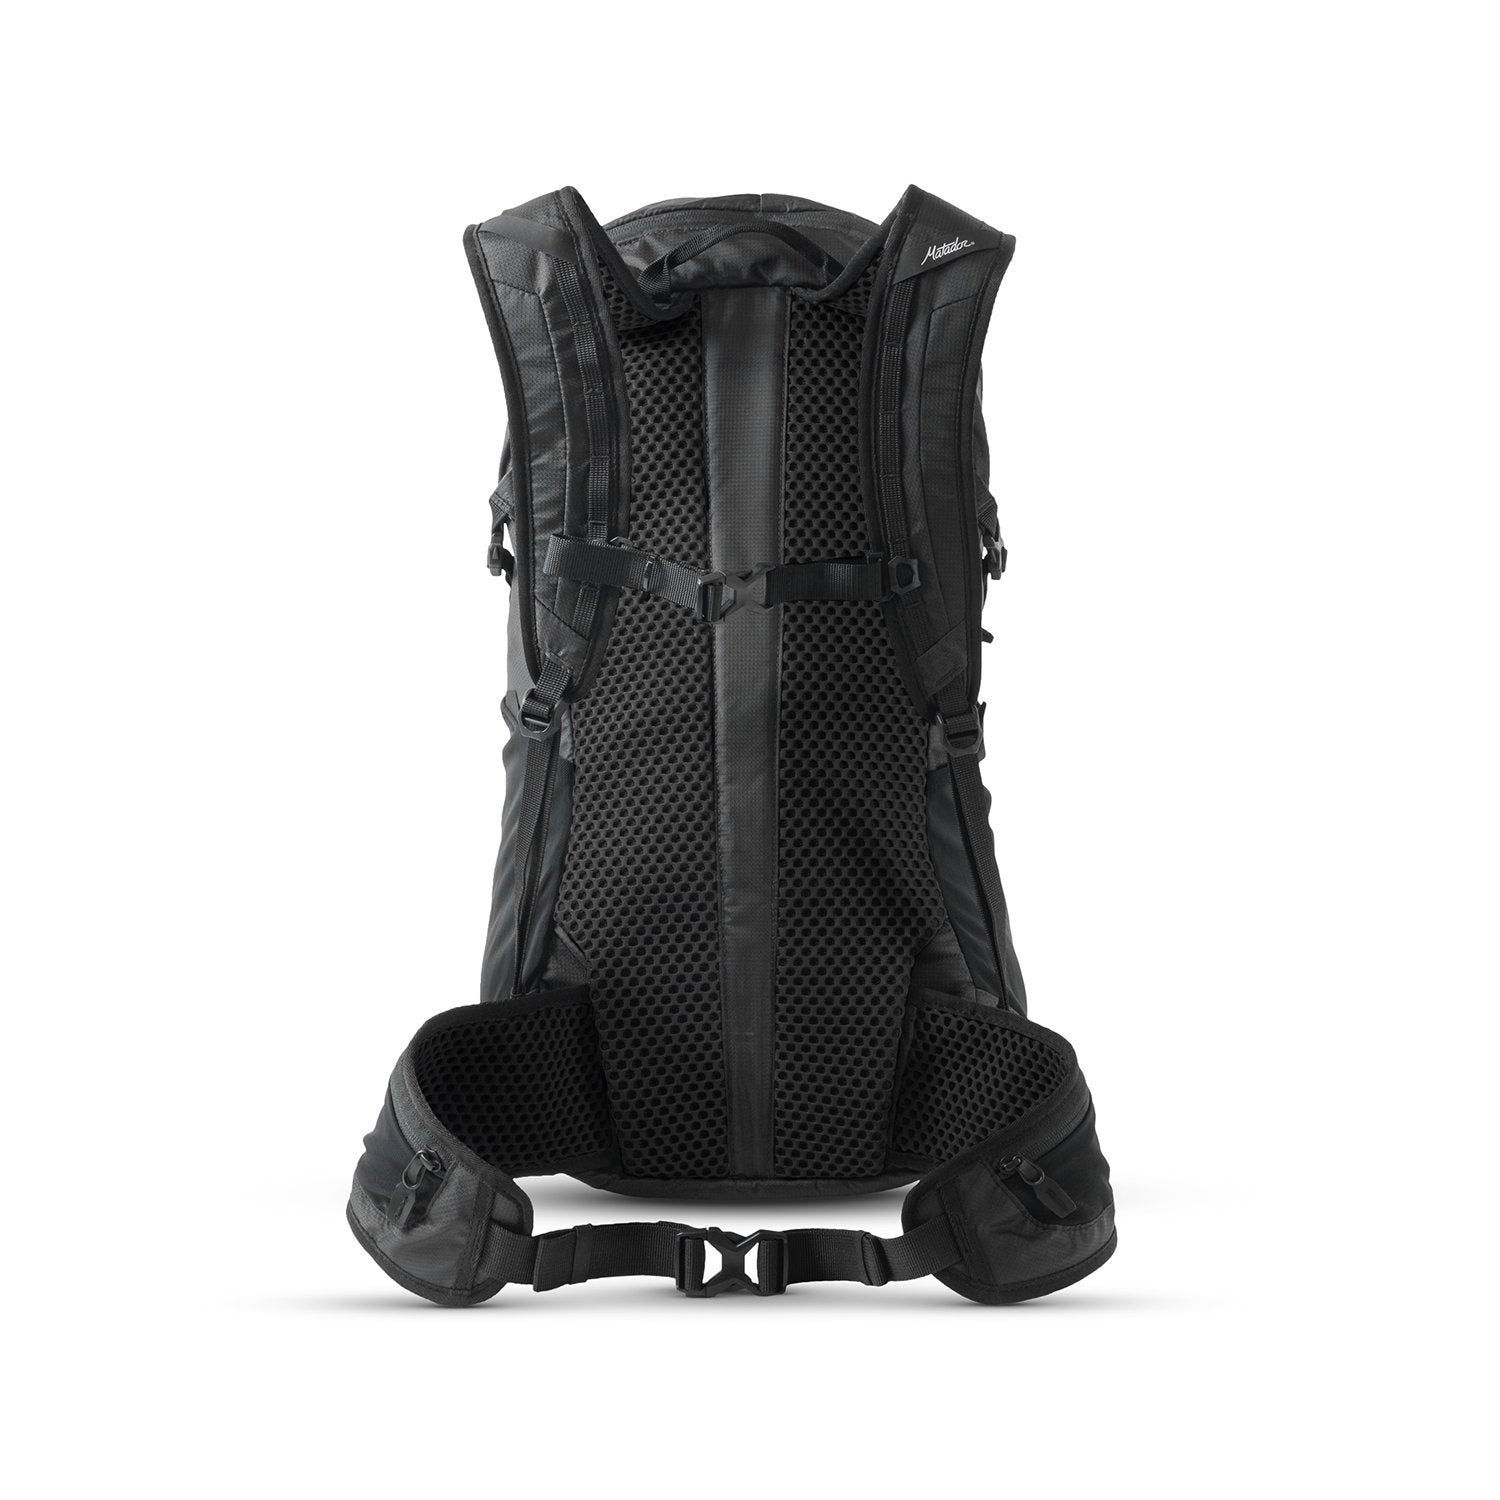 Matador Beast28 Ultralight Technical Backpack - Storming Gravity